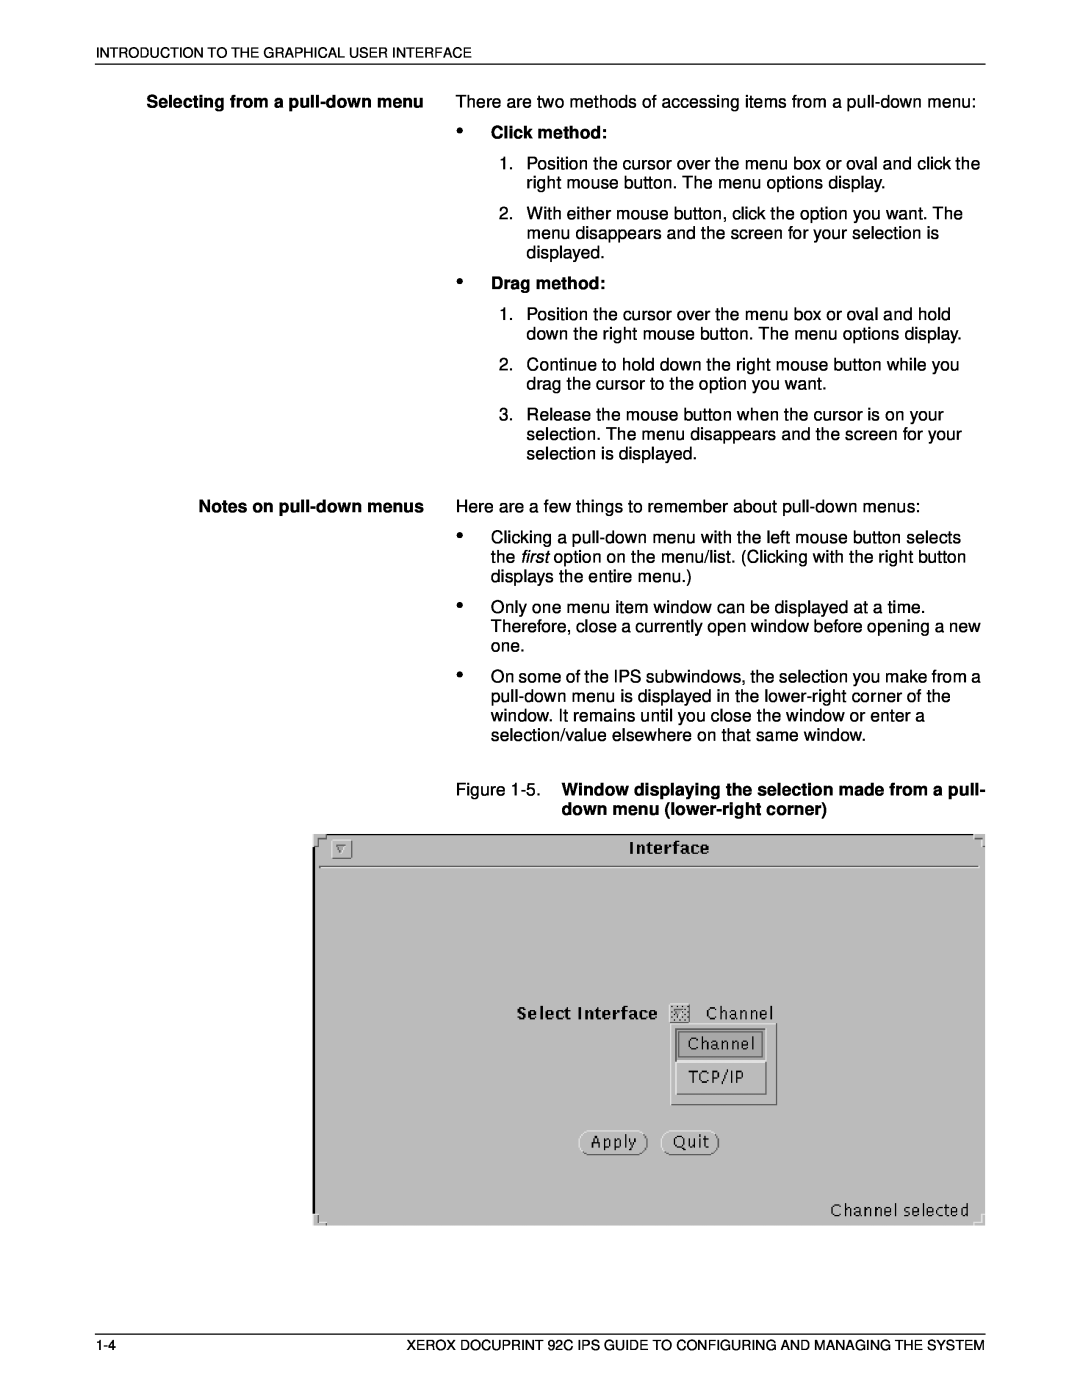 Xerox 92C IPS manual Click method, Drag method 